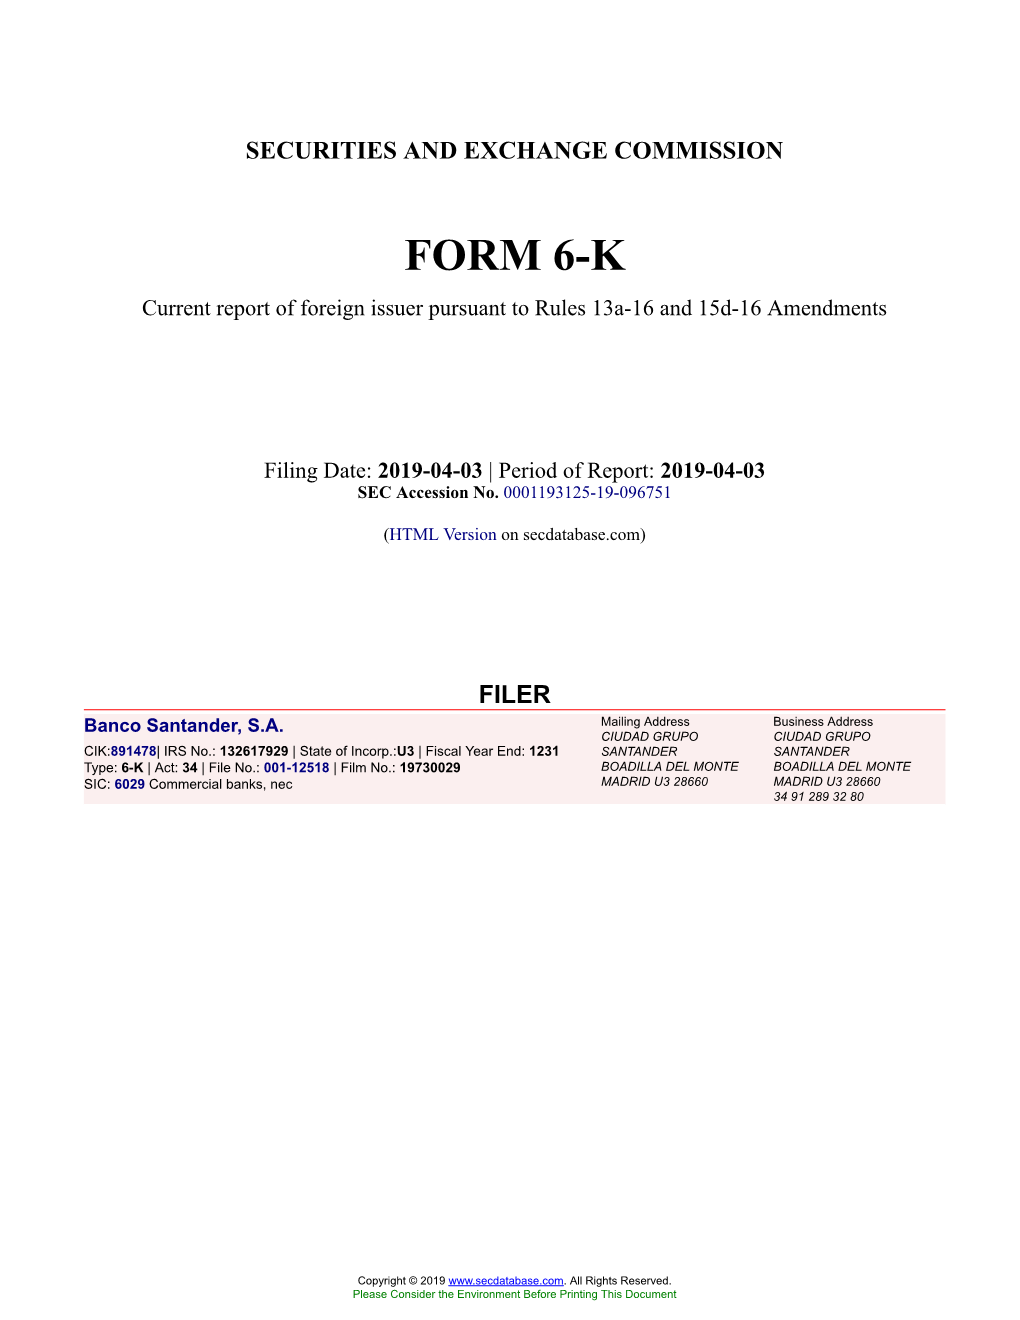 Banco Santander, S.A. Form 6-K Current Event Report Filed 2019-04